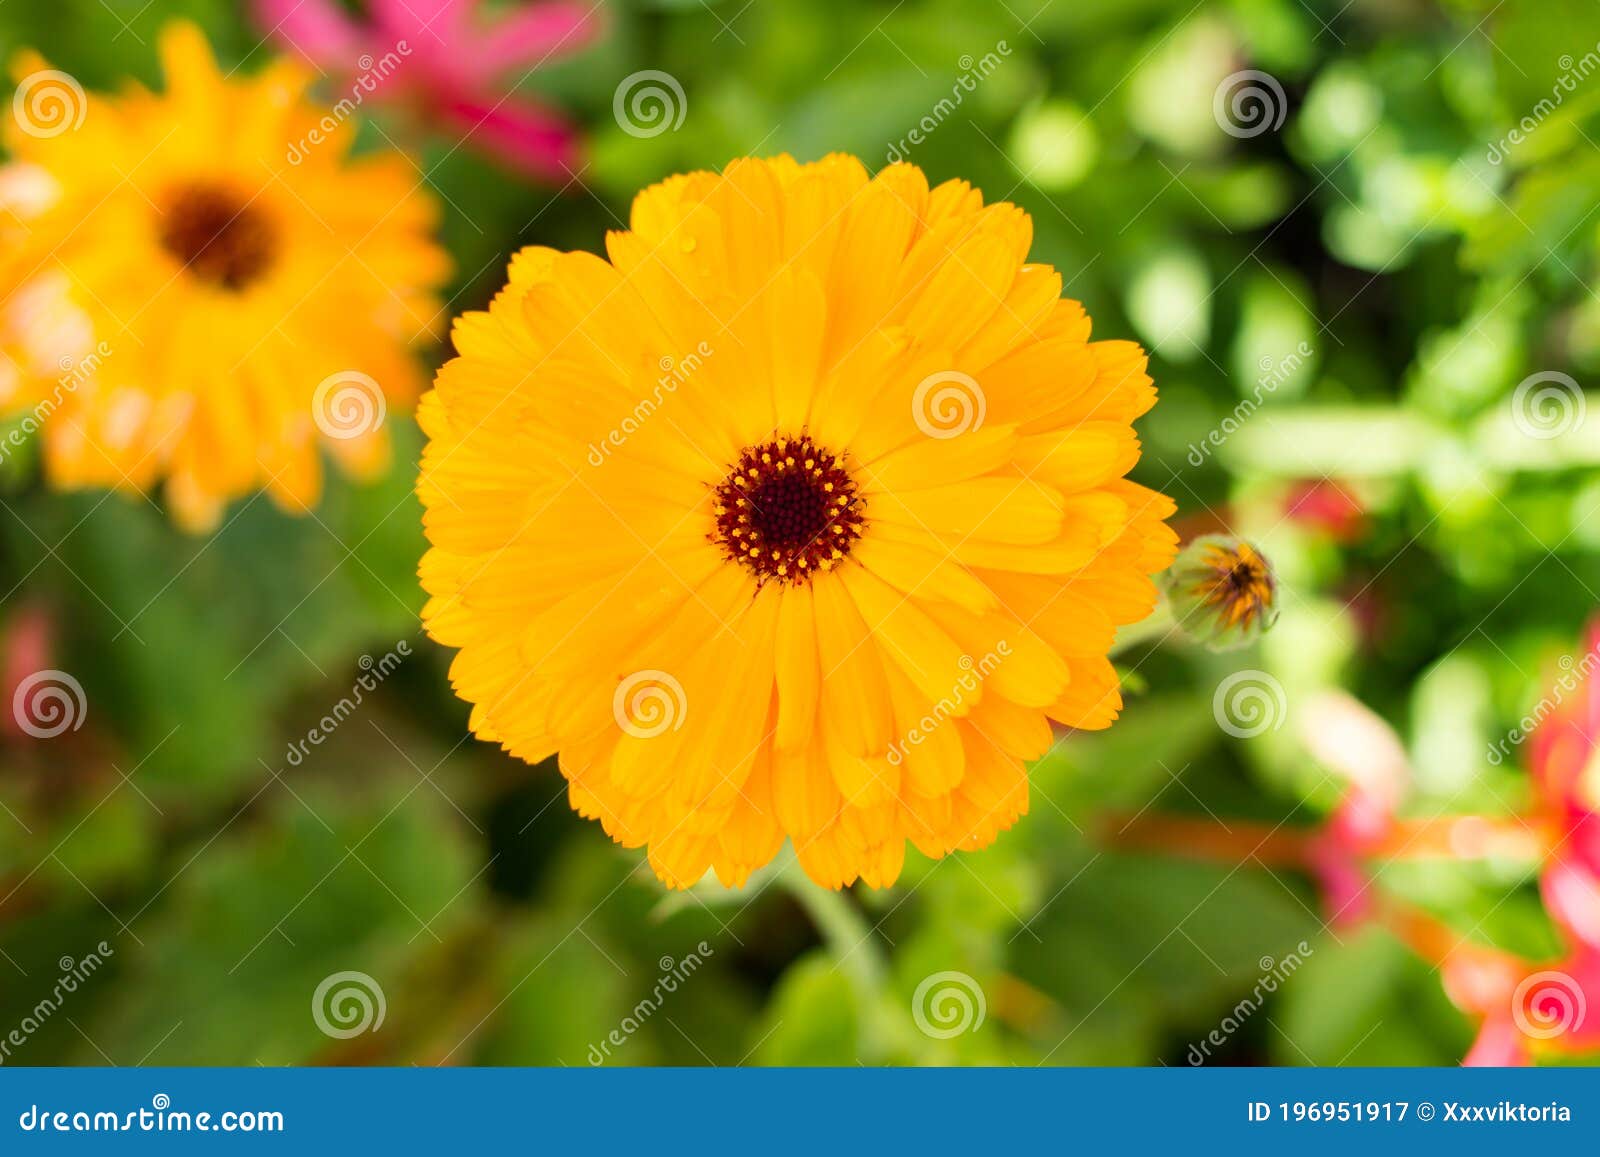 beautiful sun-like calendula flower. medicative herb